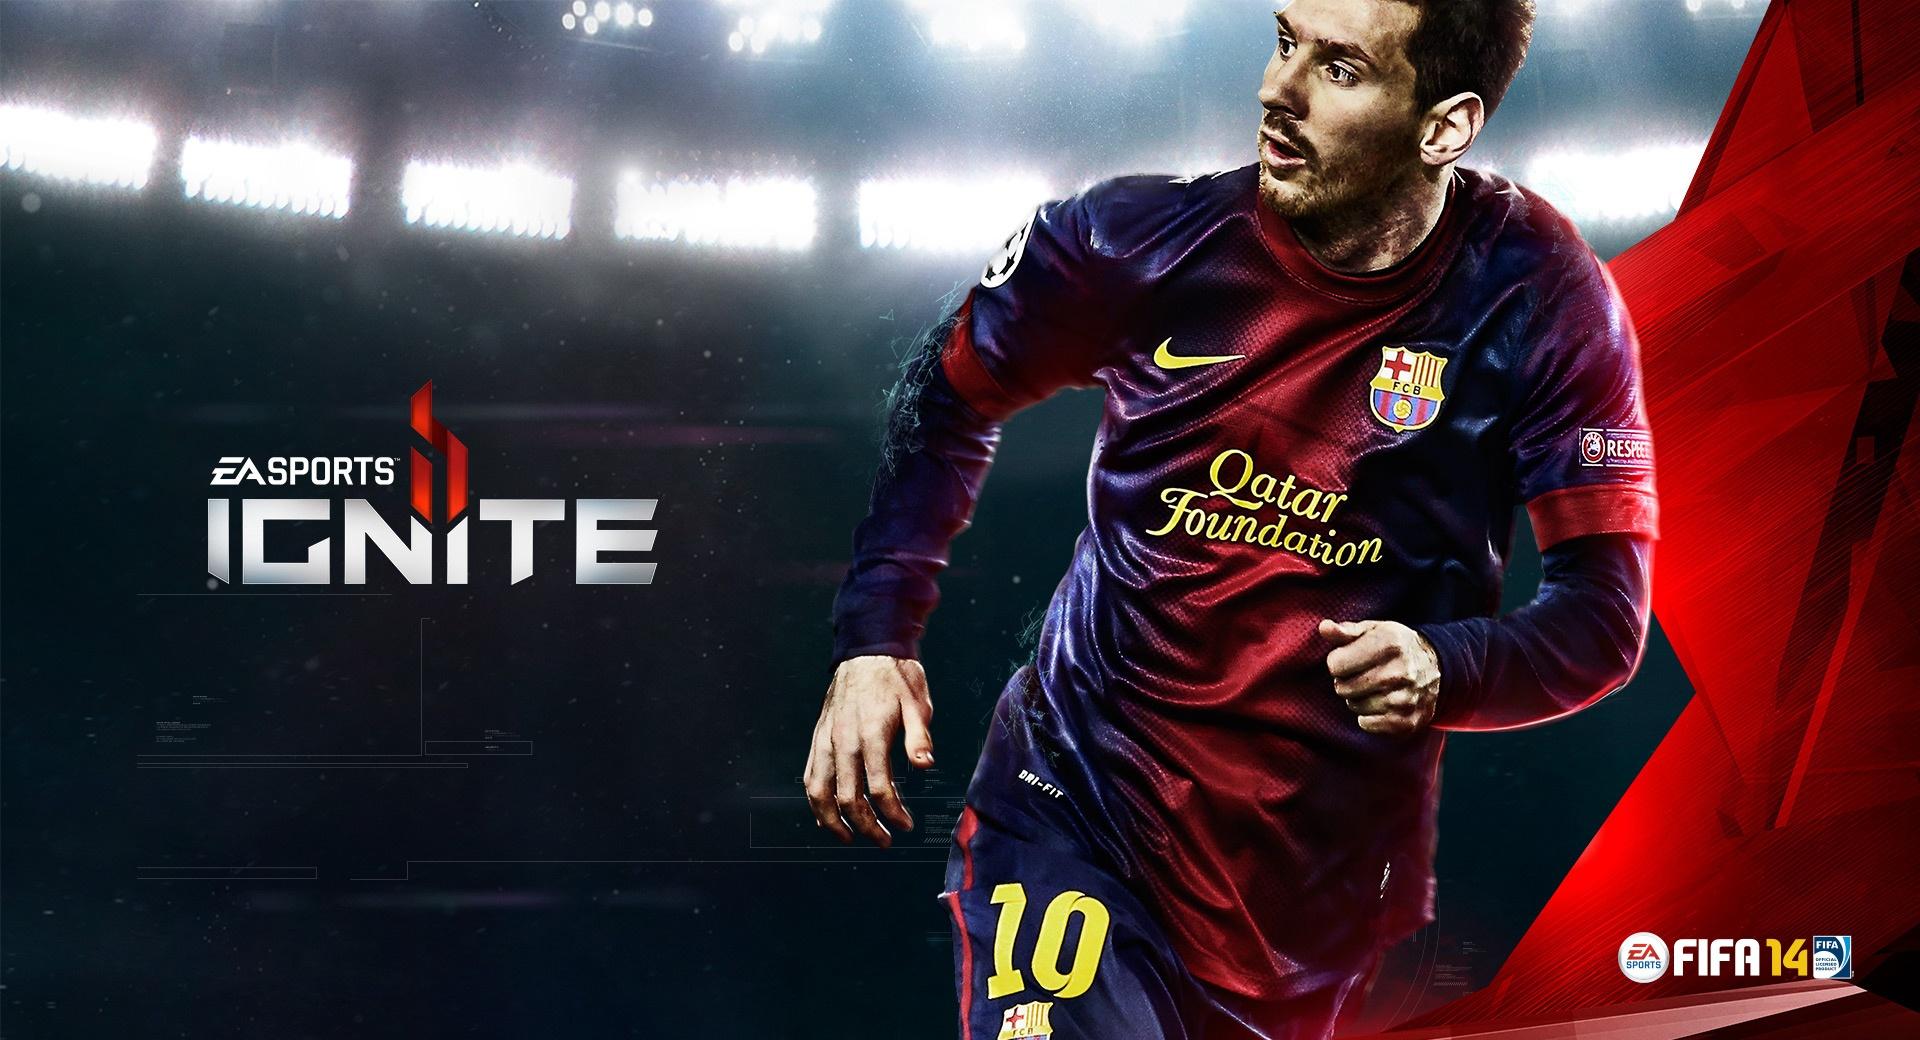 EA Sports Ignite FIFA 14 wallpapers HD quality